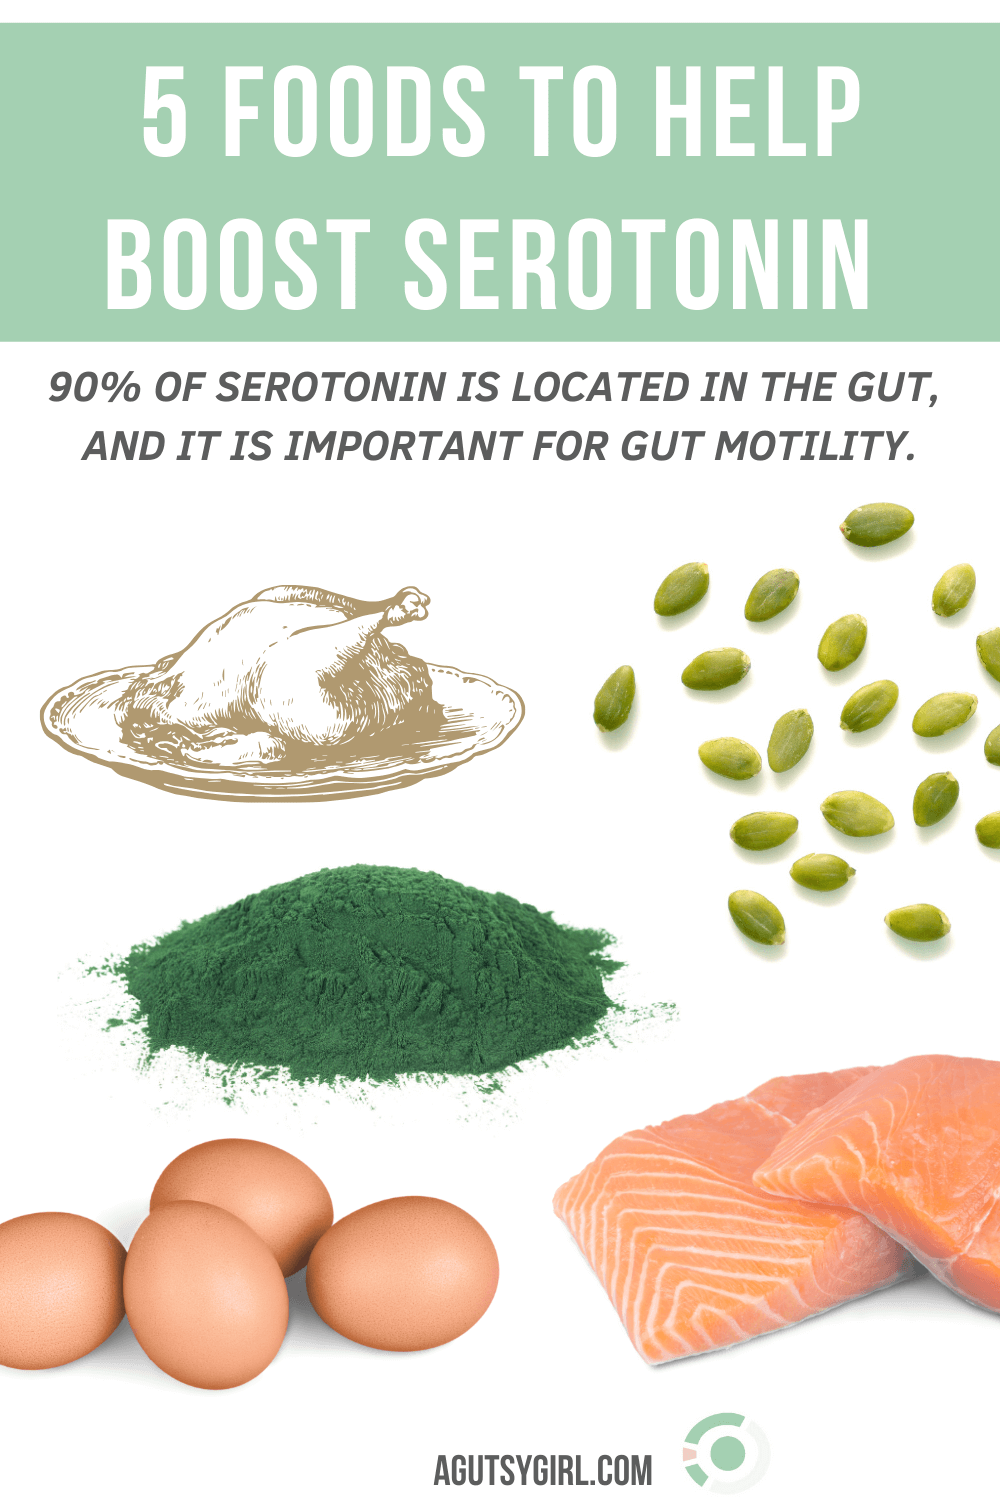 5 Foods to Help Boost Serotonin agutsygirl.com #gutbrain #guthealth #gutbrainaxis